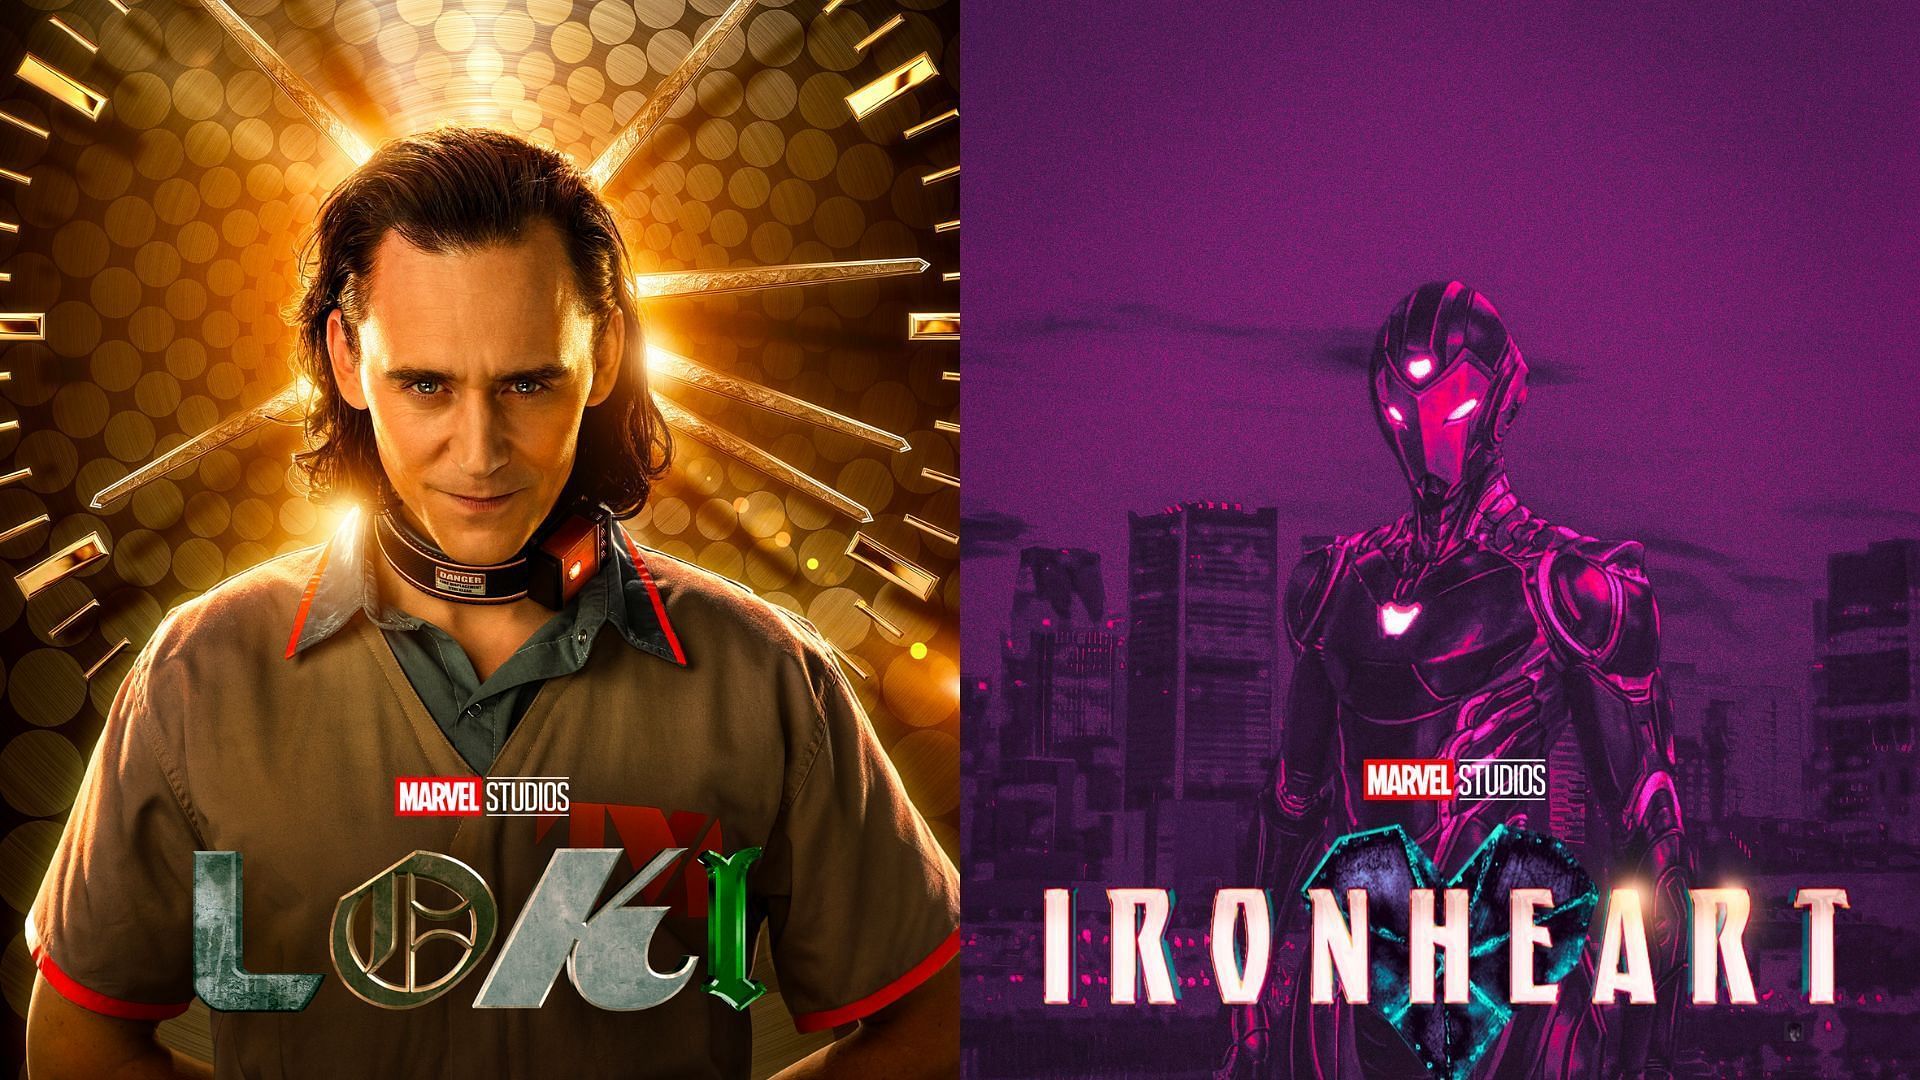 (L) Loki and (R) Ironheart will be available on Disney Plus (Images via IMDb)